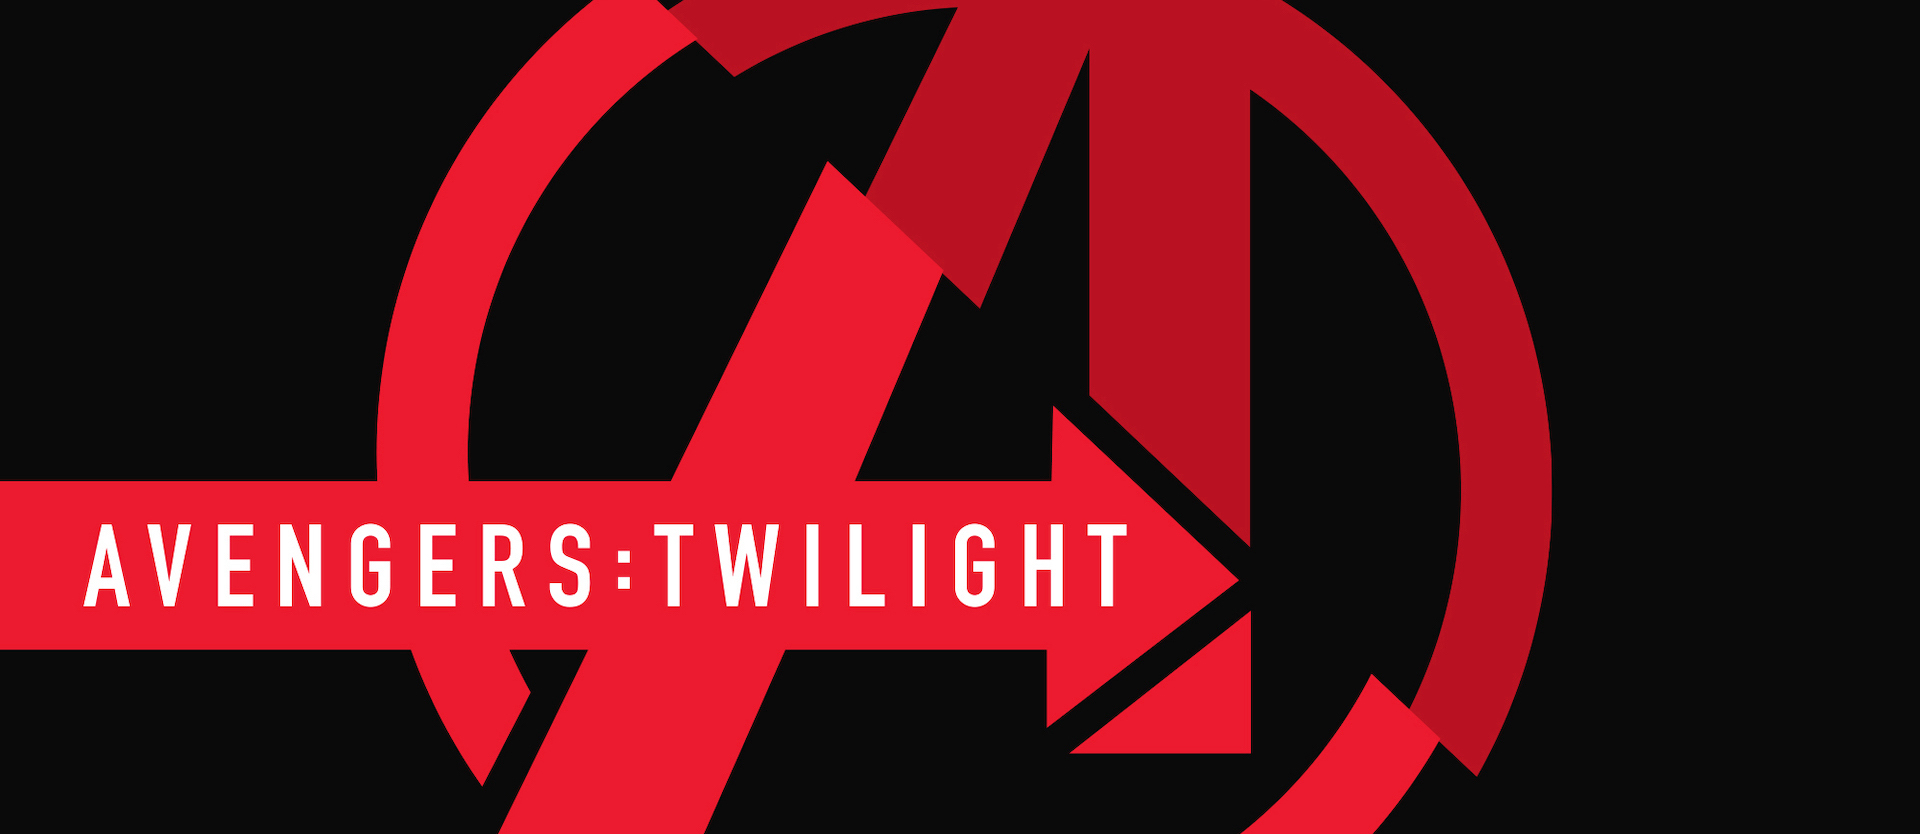 Chip Zdarsky returns to Marvel with 'Avengers: Twilight'